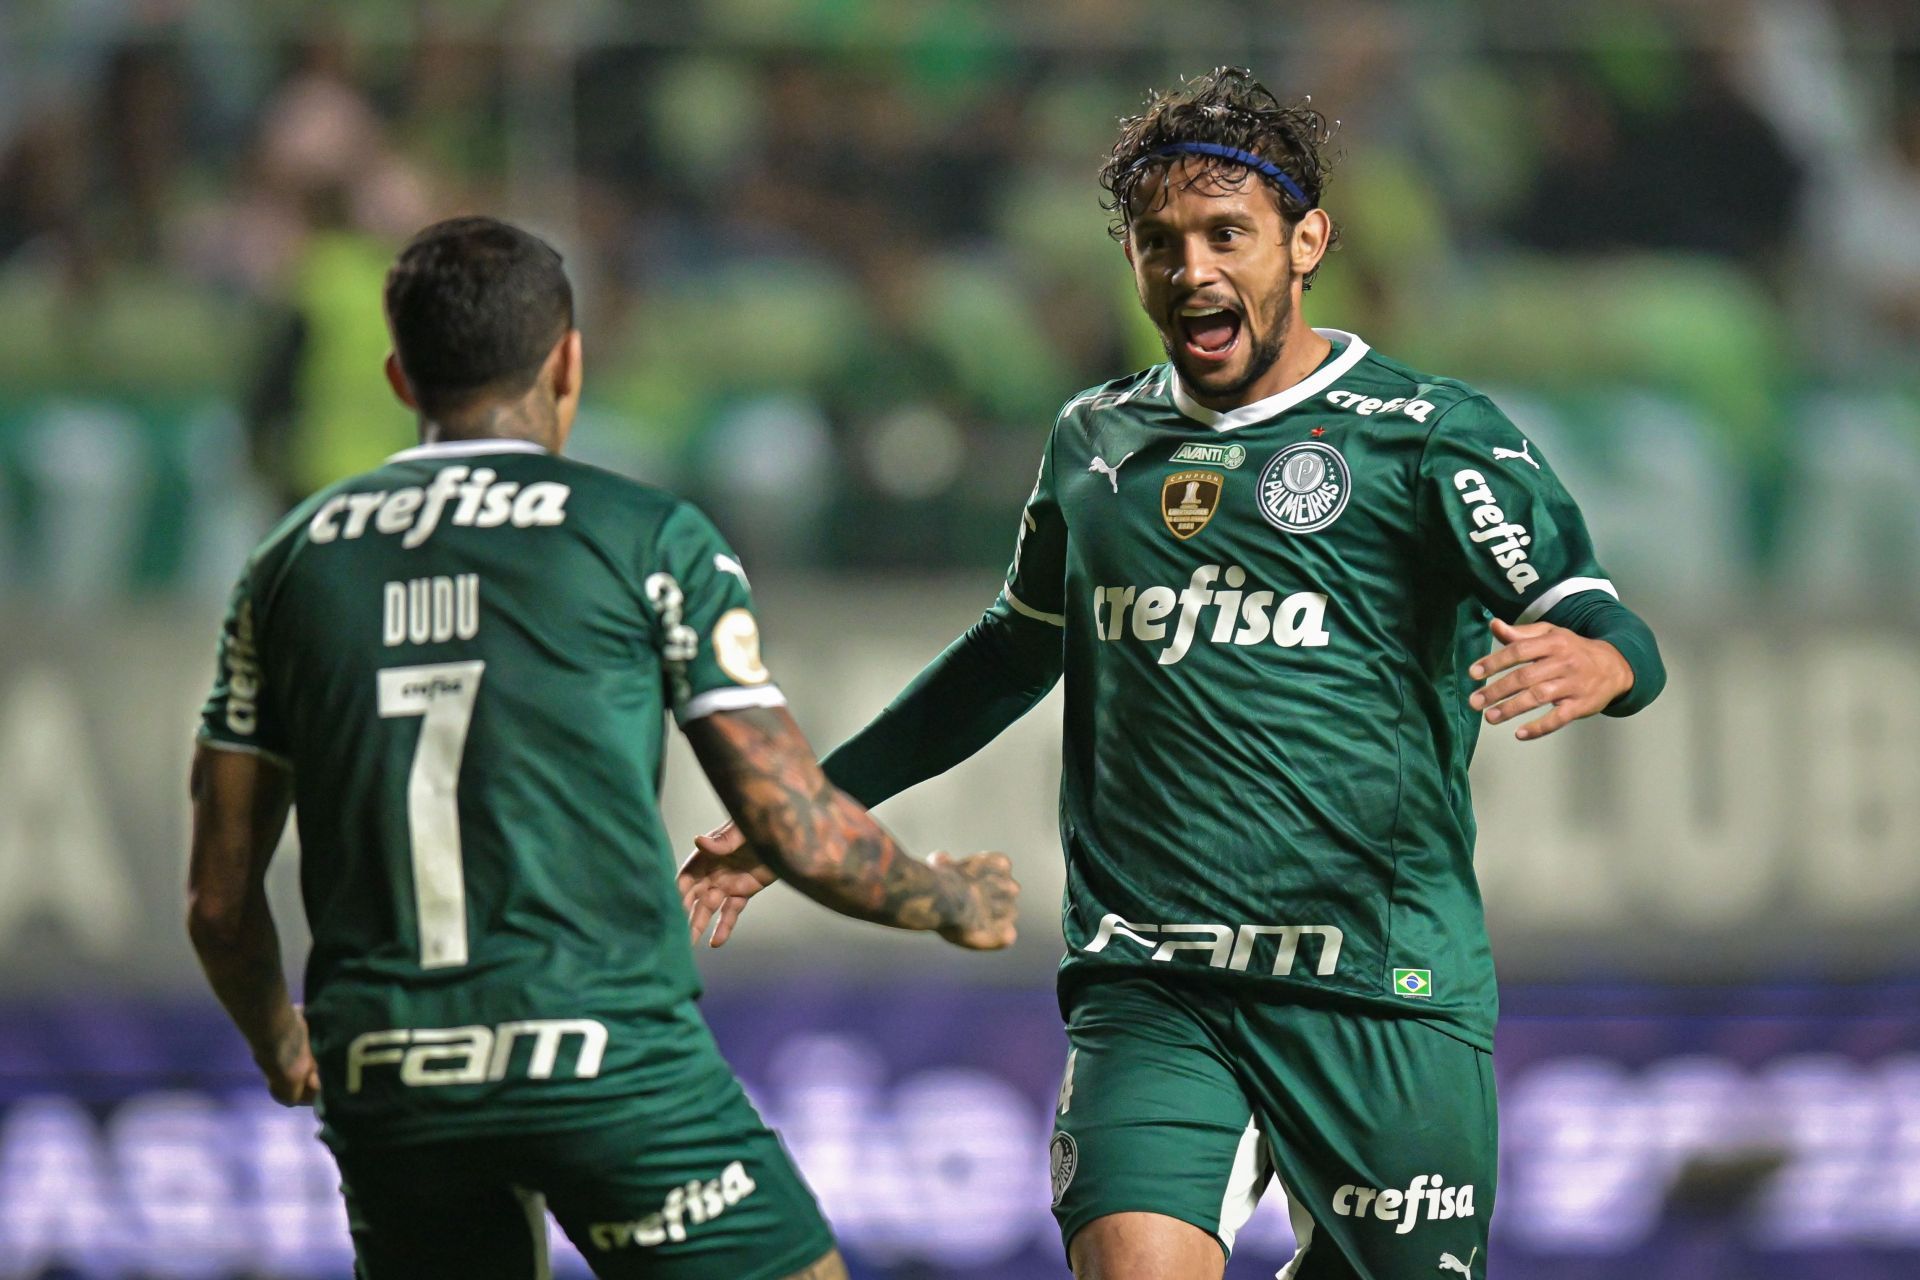 Palmeiras face Ceara in the Brazilian Serie A on Saturday.